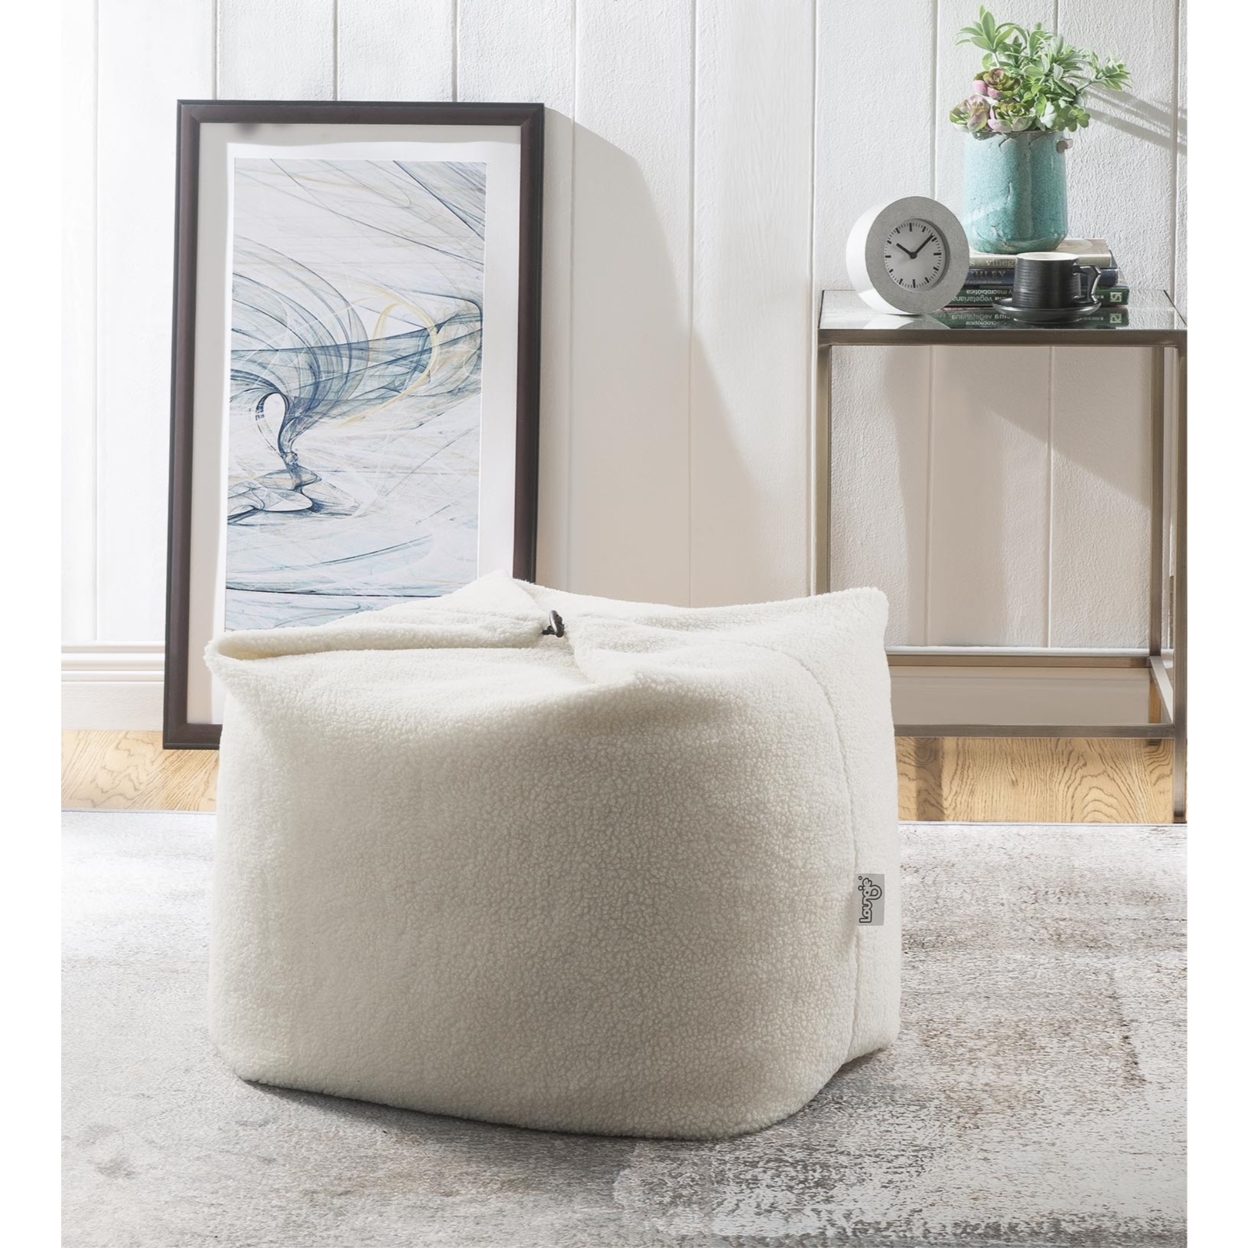 Loungie? Magic Pouf Beanbag-Linen Or Sherpa Fabric-3-in-1 Convertible Ottoman + Chair + Floor Pillow-Modern & Functional - Beige Linen